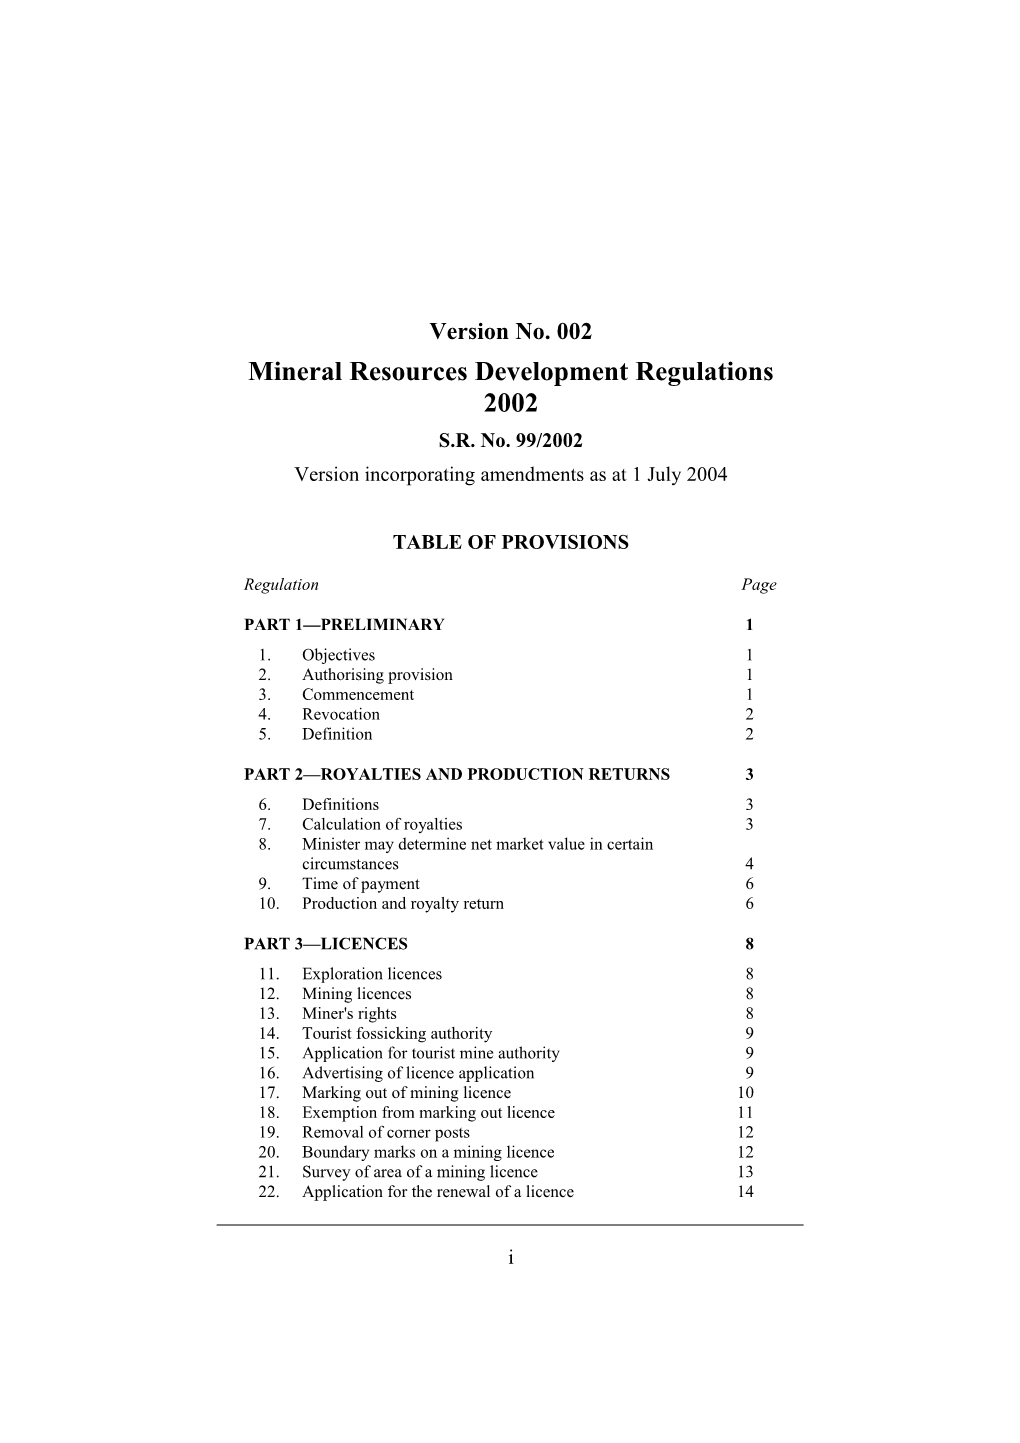 Mineral Resources Development Regulations 2002